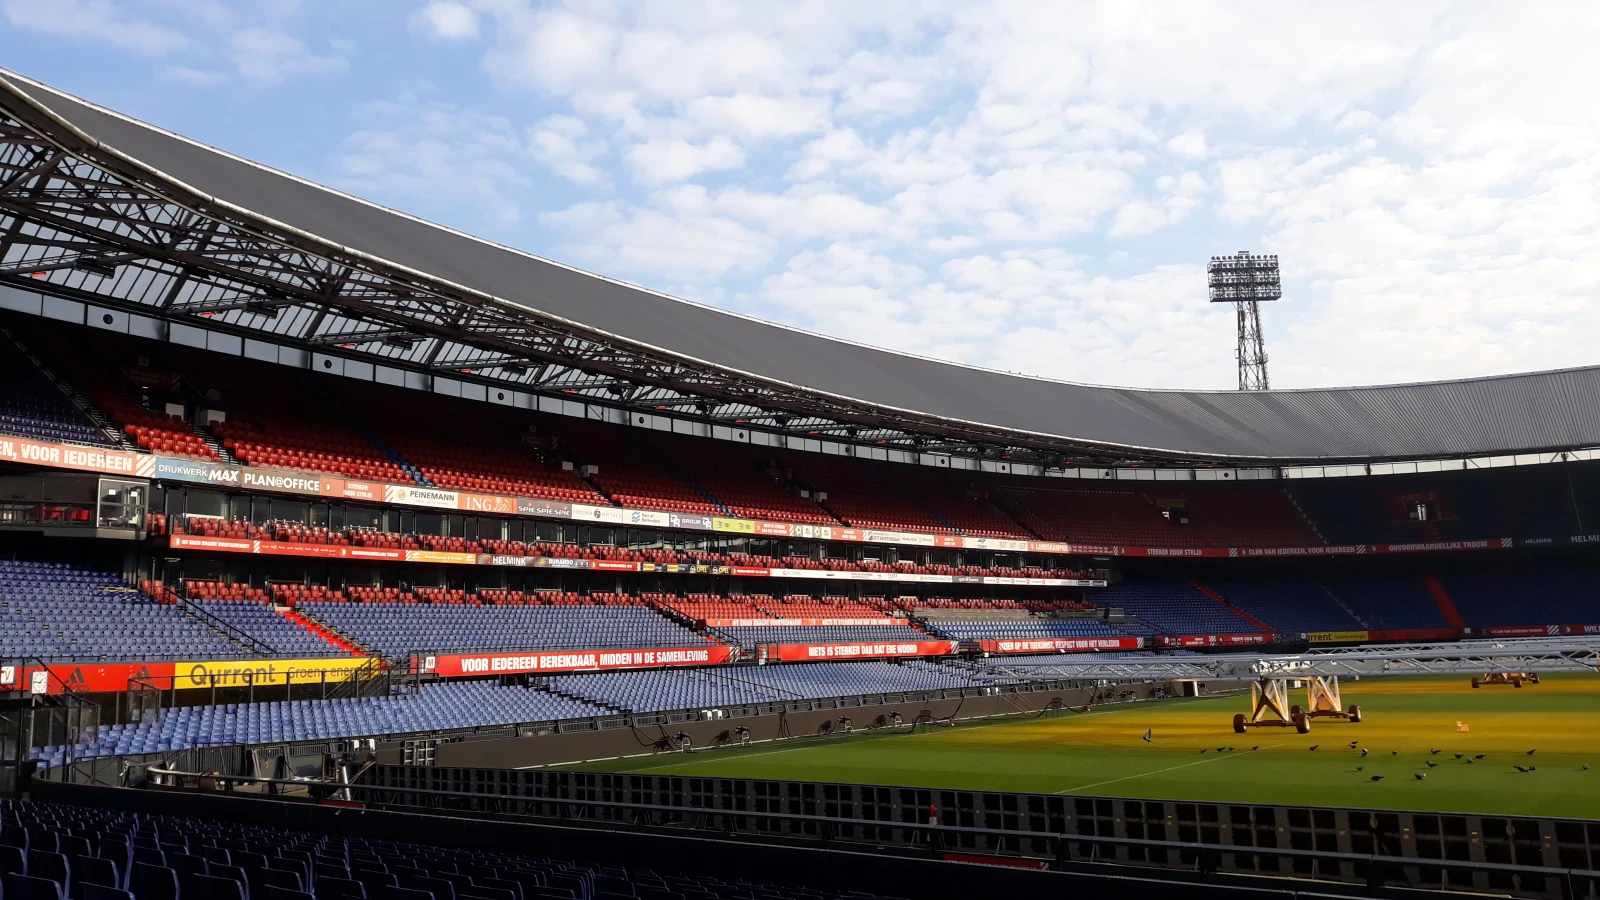 Doorgaan van wedstrijd tussen Feyenoord en Sparta onzeker